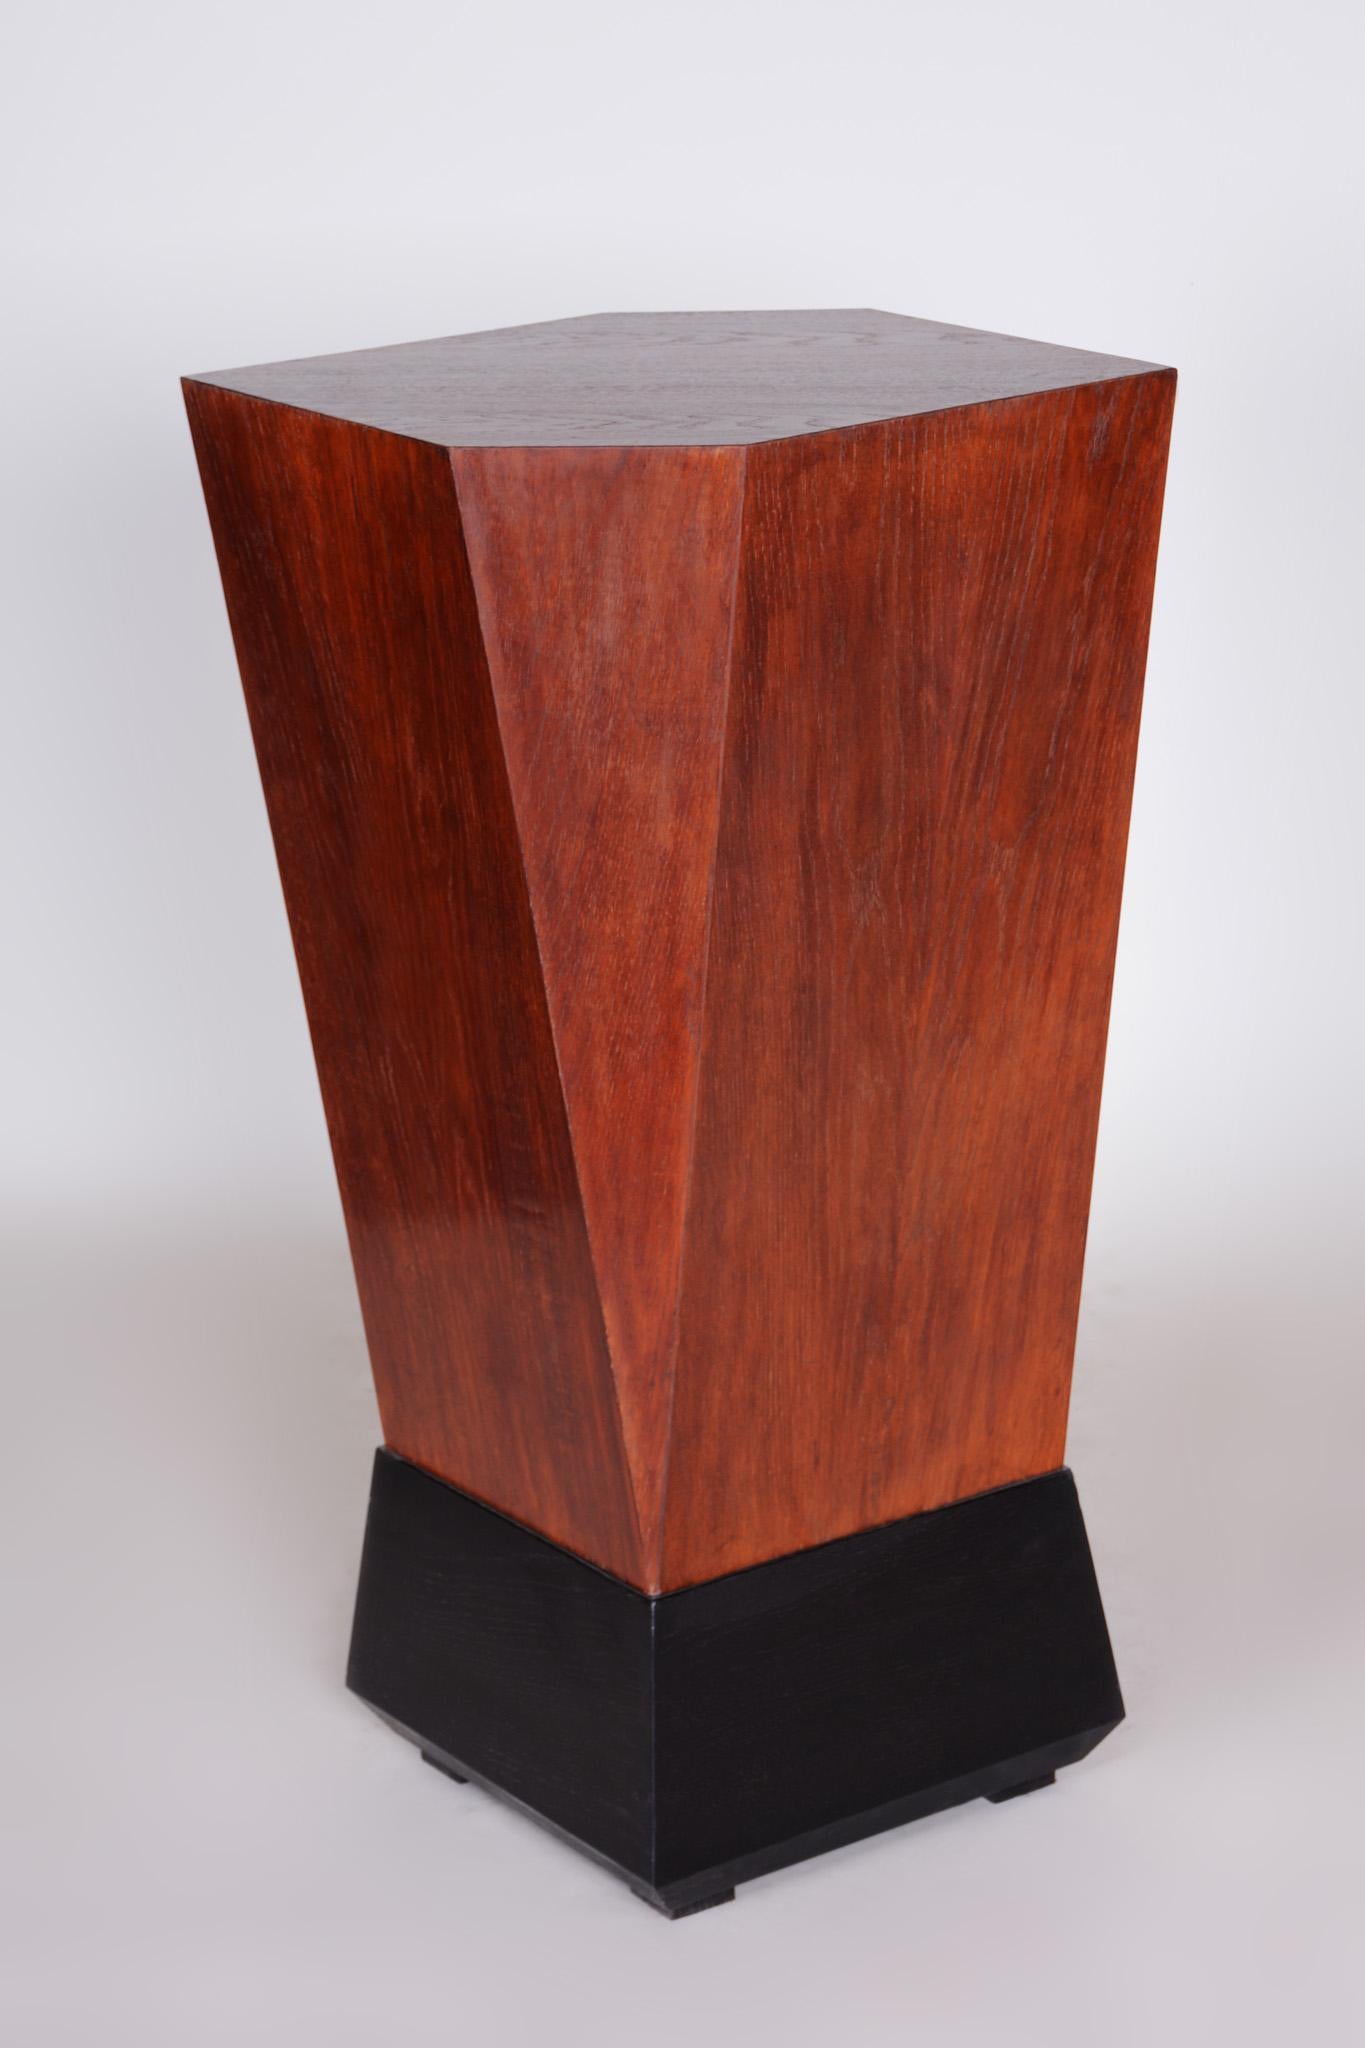 Pedestal from Czechoslovakia
Architect: Josef Gocar

Period: 1920-1929
Material: Oak.